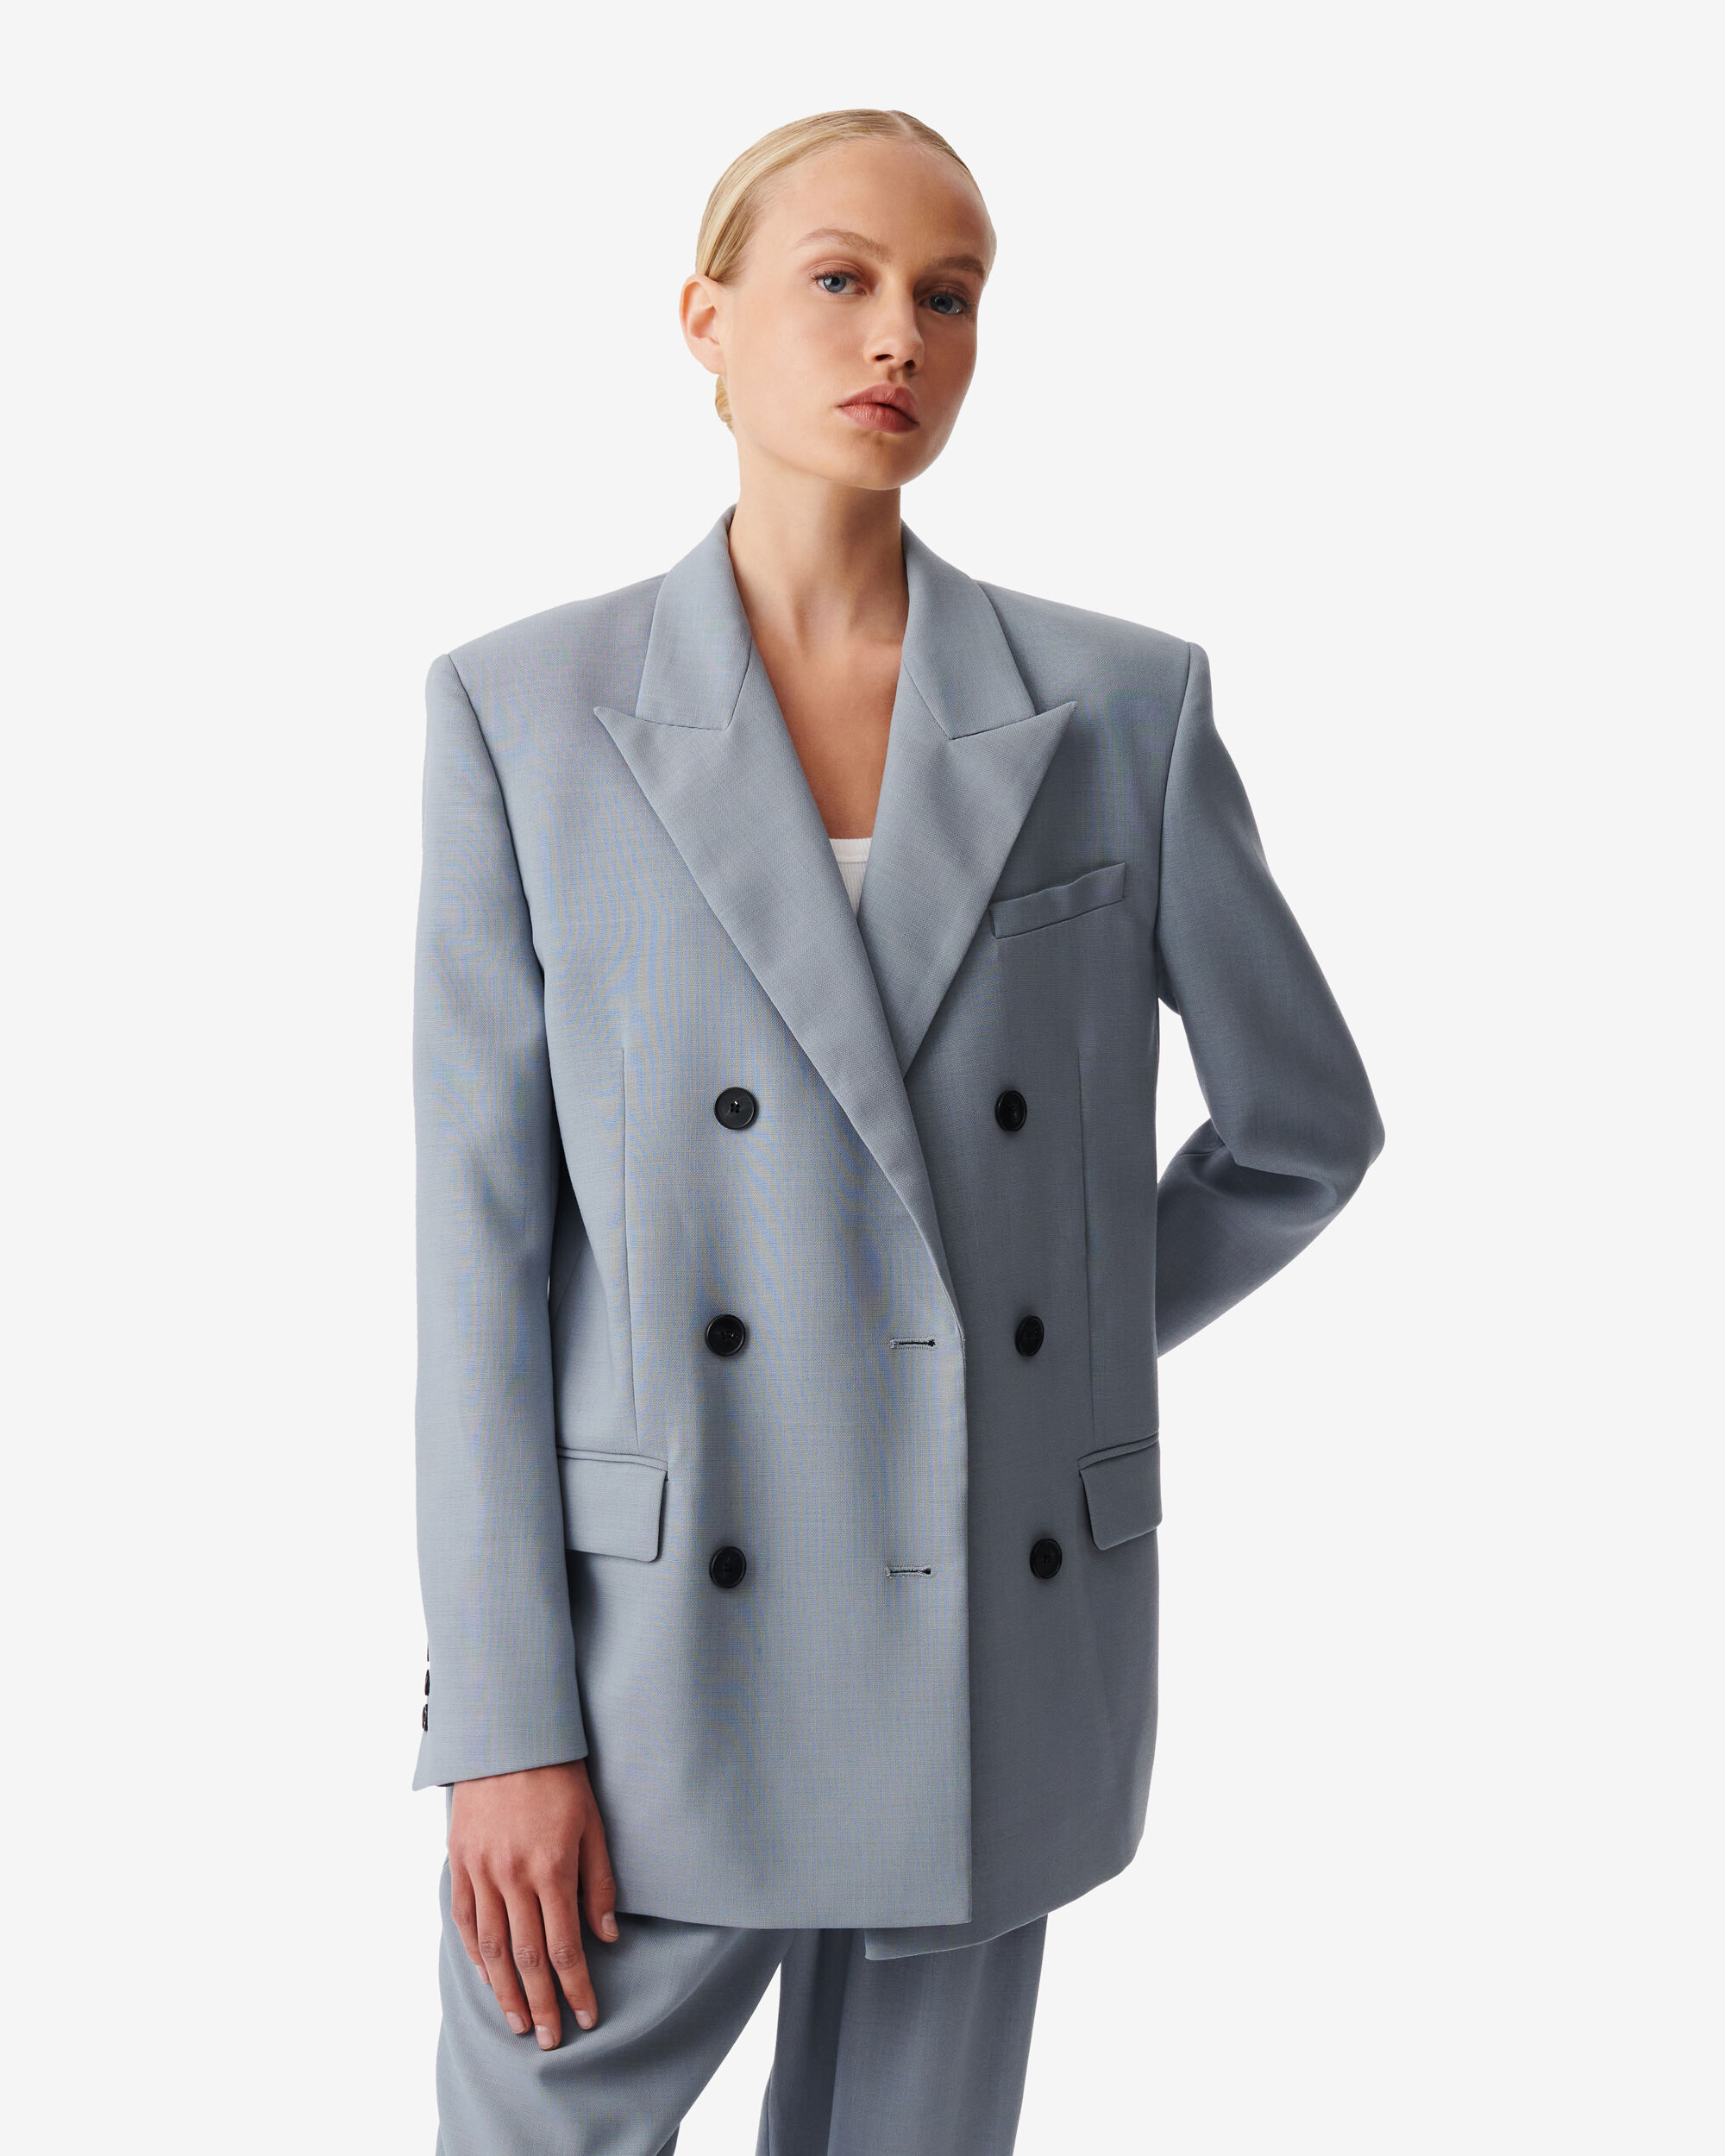 Exclusive Days - Women's jackets & coats - IRO | Official online store